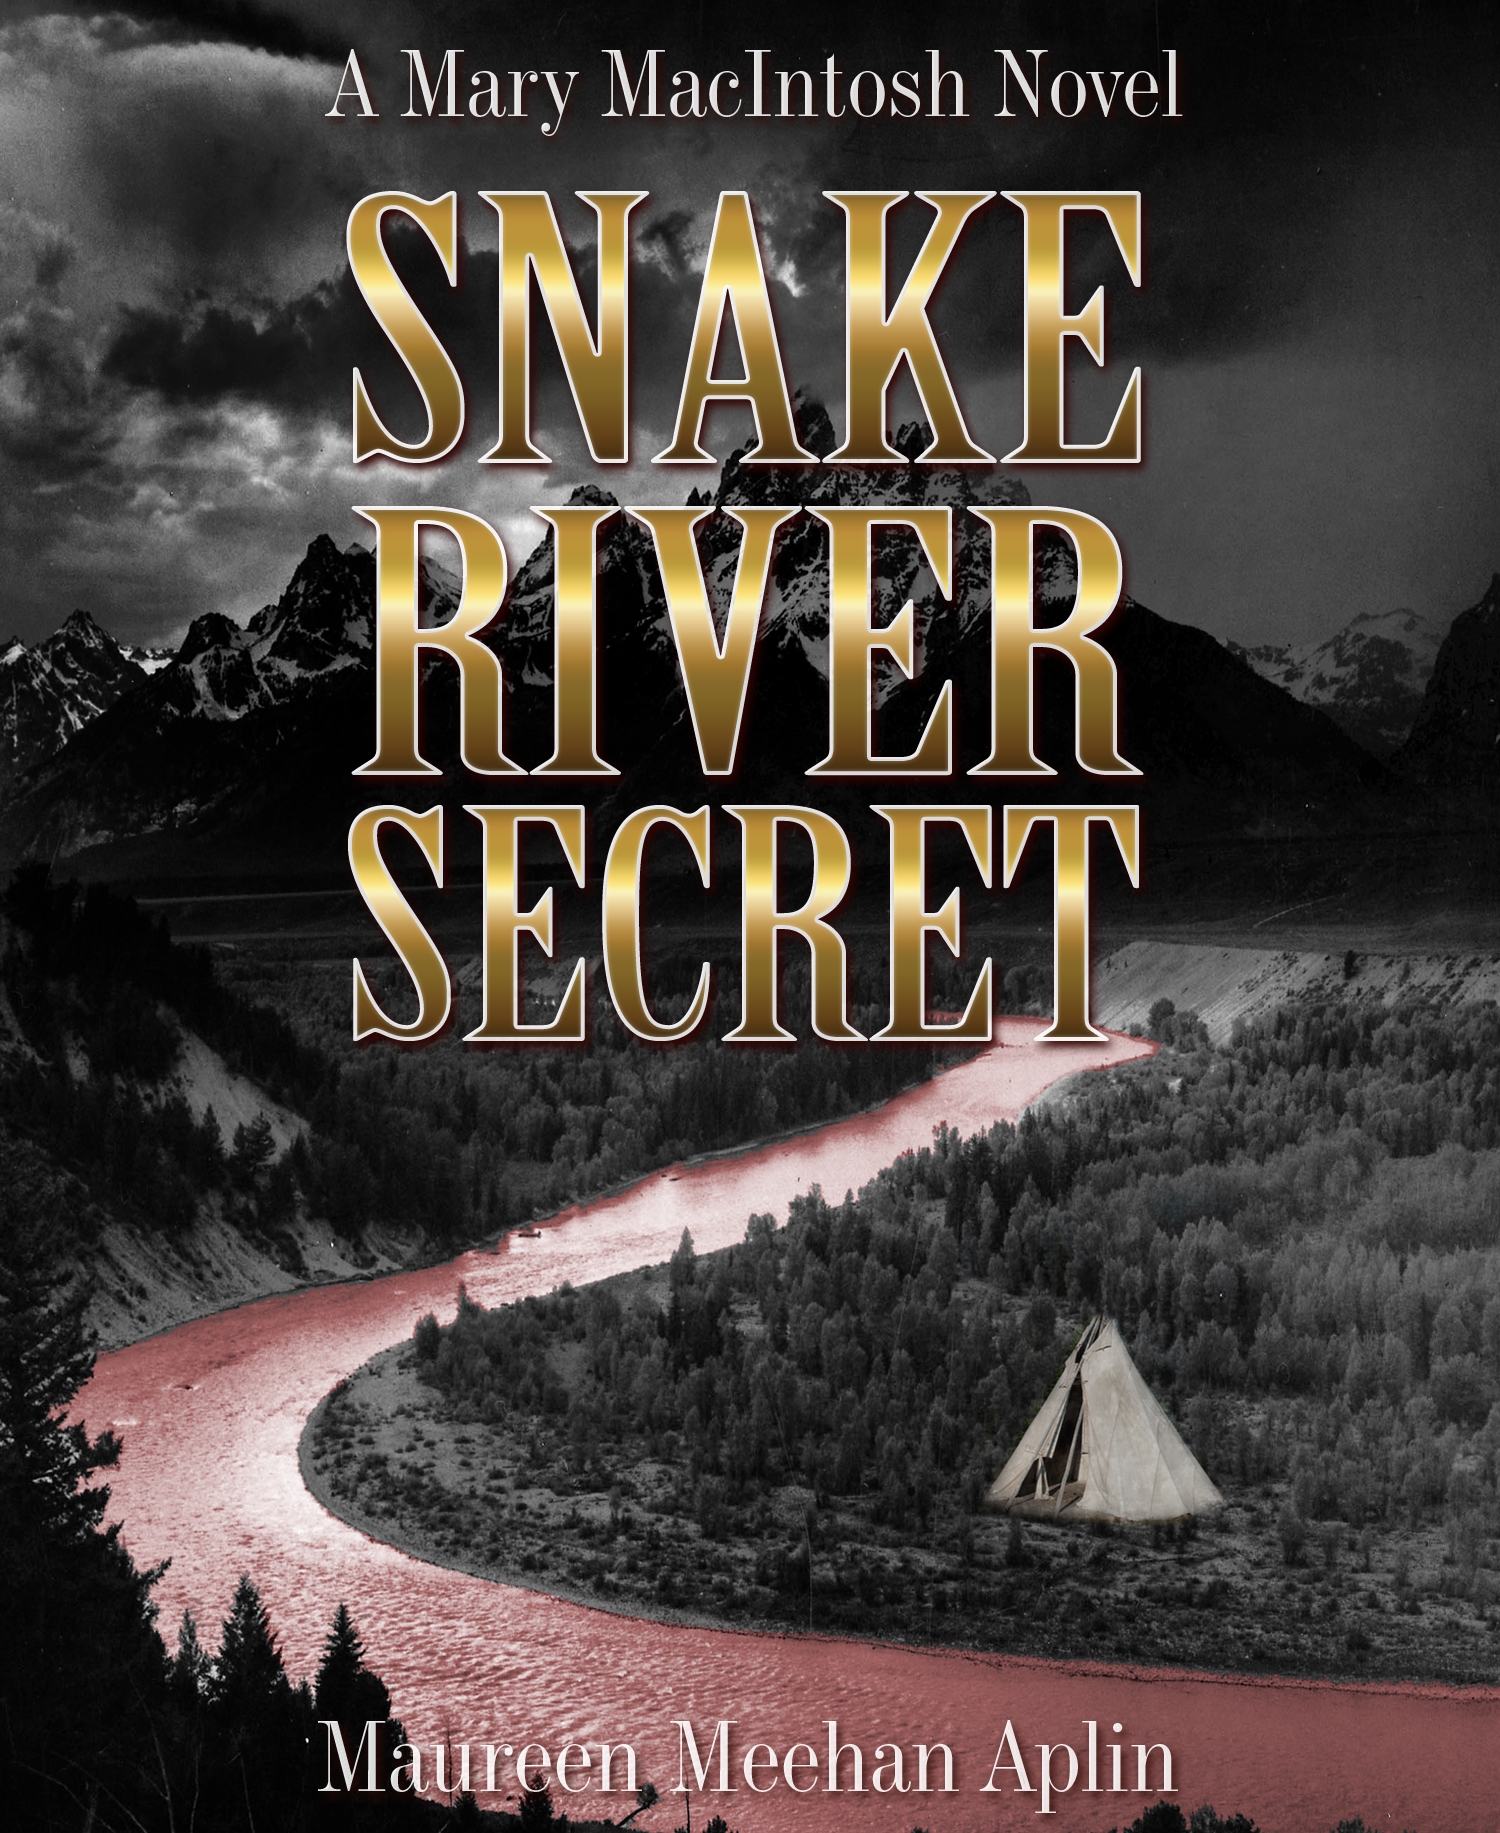 Snake River Secret, a Mary MacIntosh novel